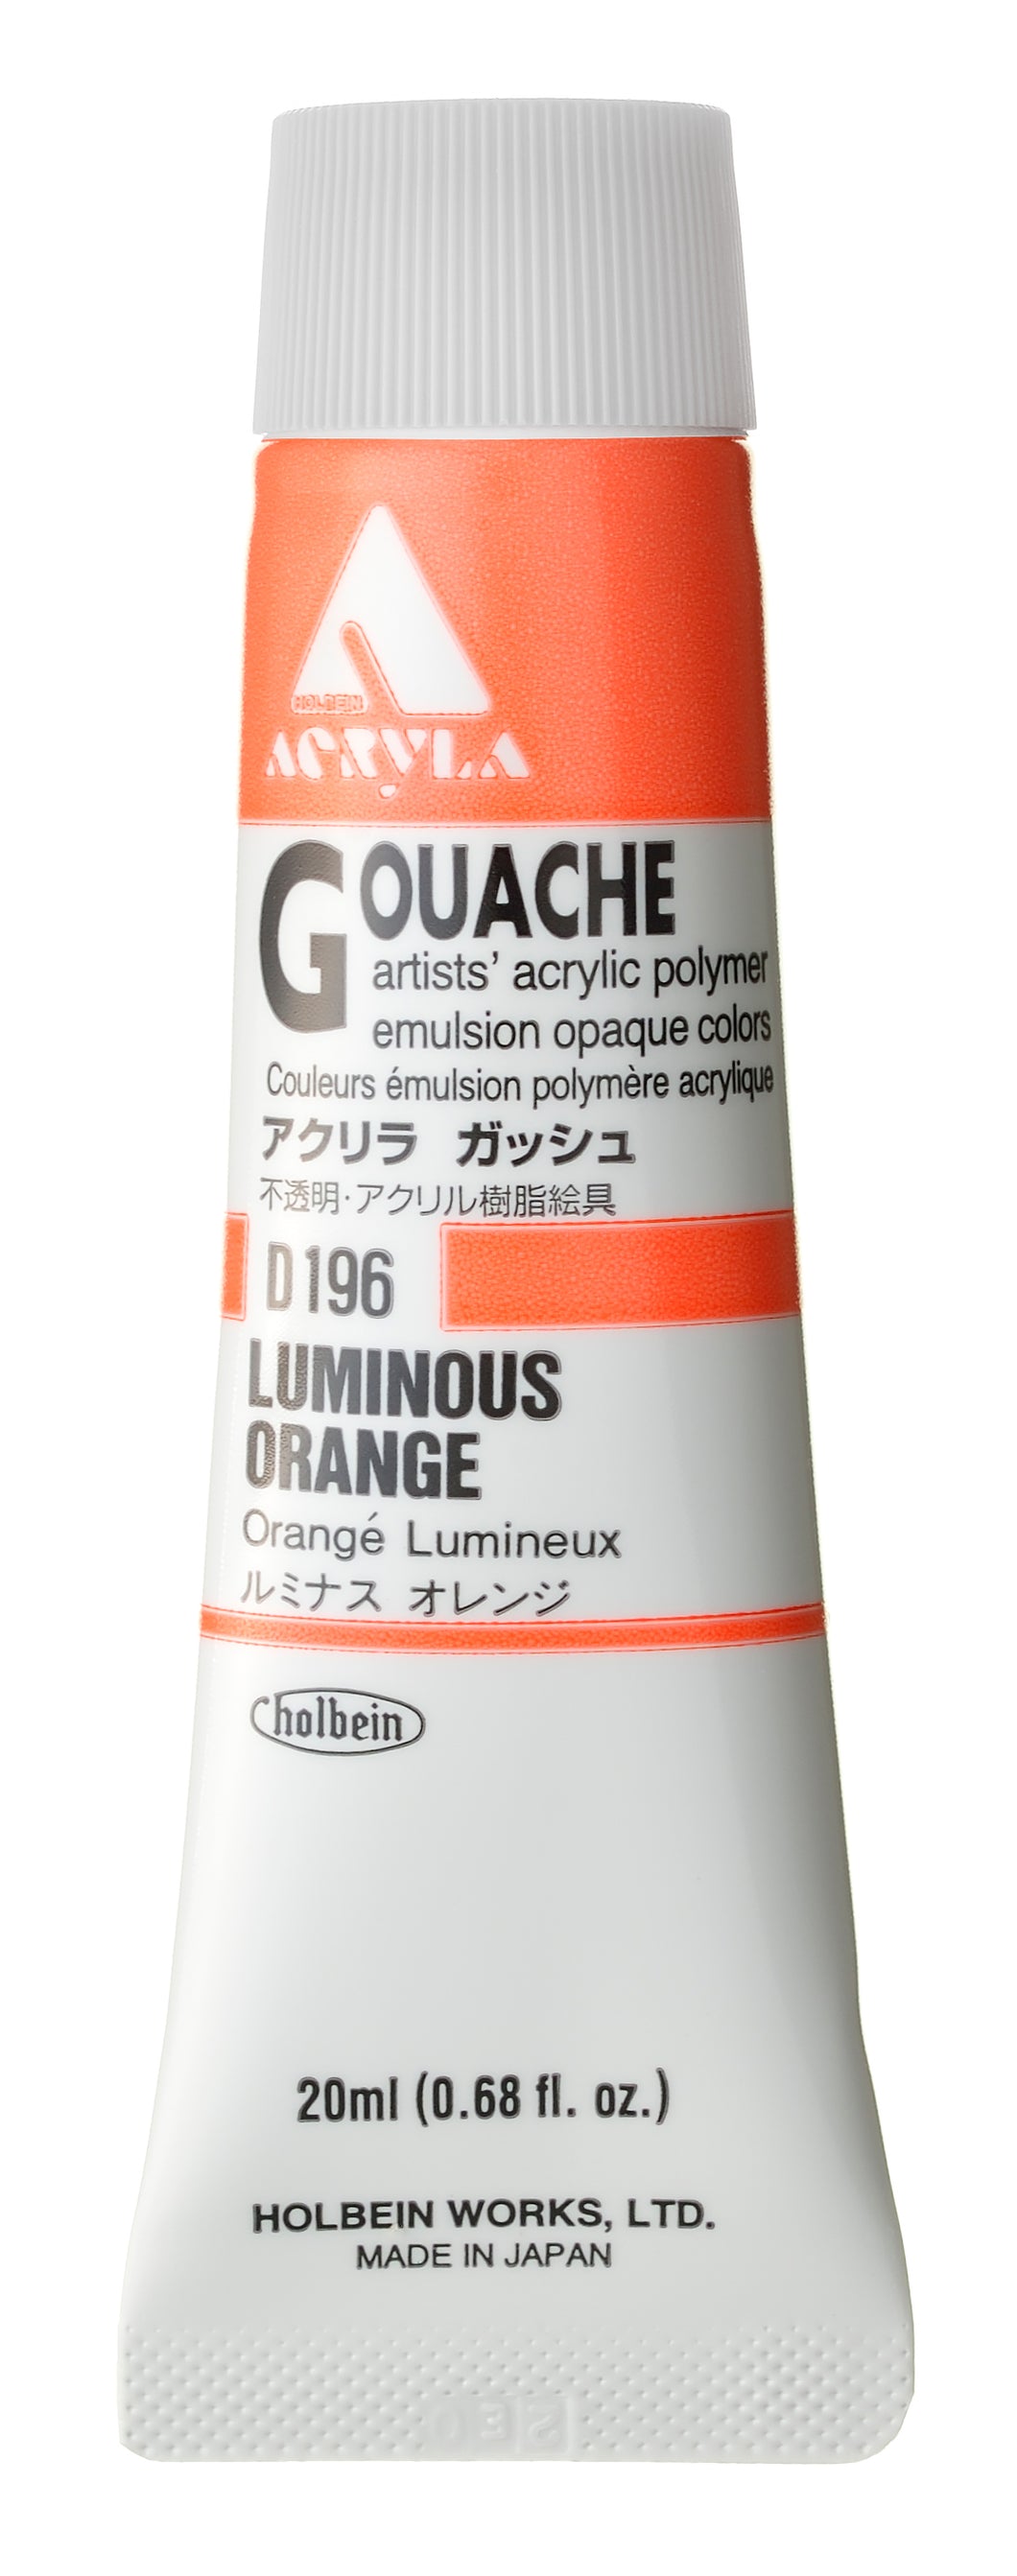 Holbein Acryla Gouache- Luminous Orange (D196)